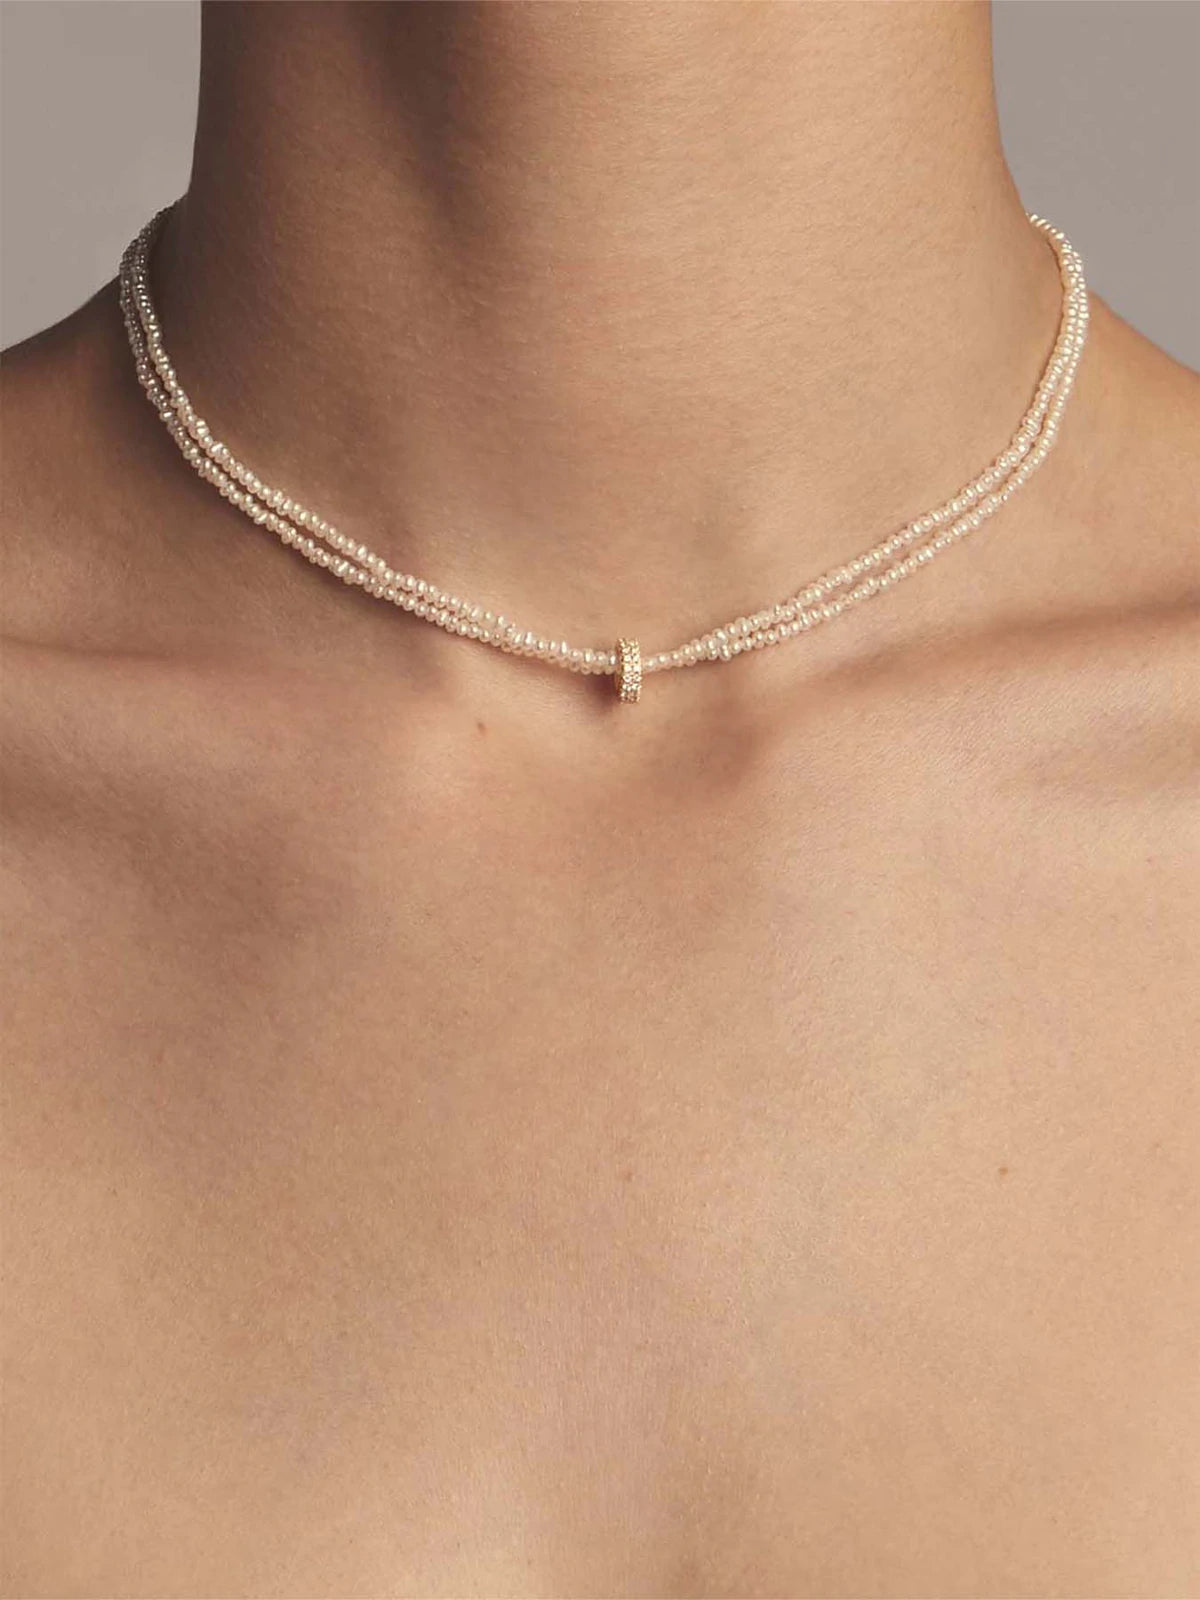 Two-Strand “Dancing Pearls” Necklace with Diamond Slider - Mizuki